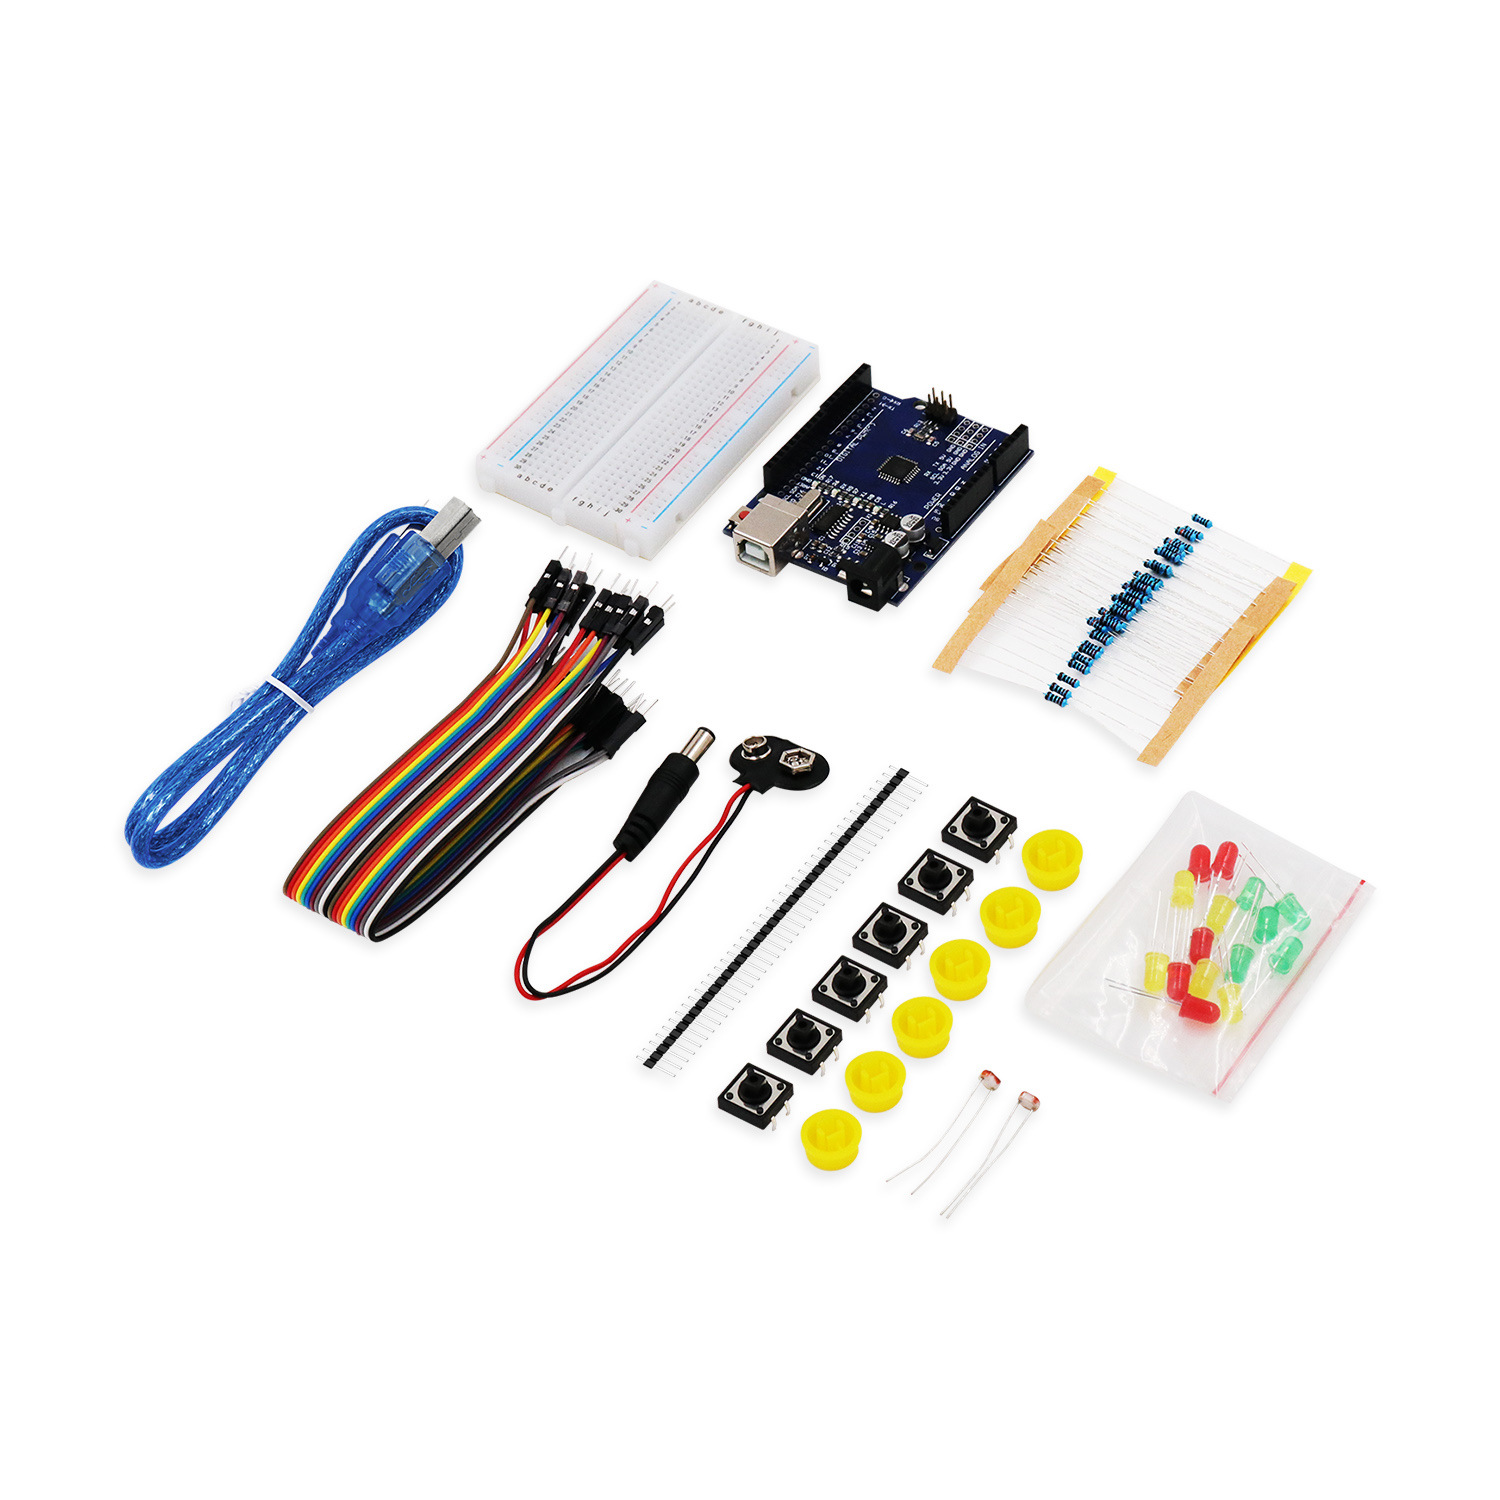 Starter Kit UNO R3 mini 13合1套件 入门套件迷你面包板LED跳线